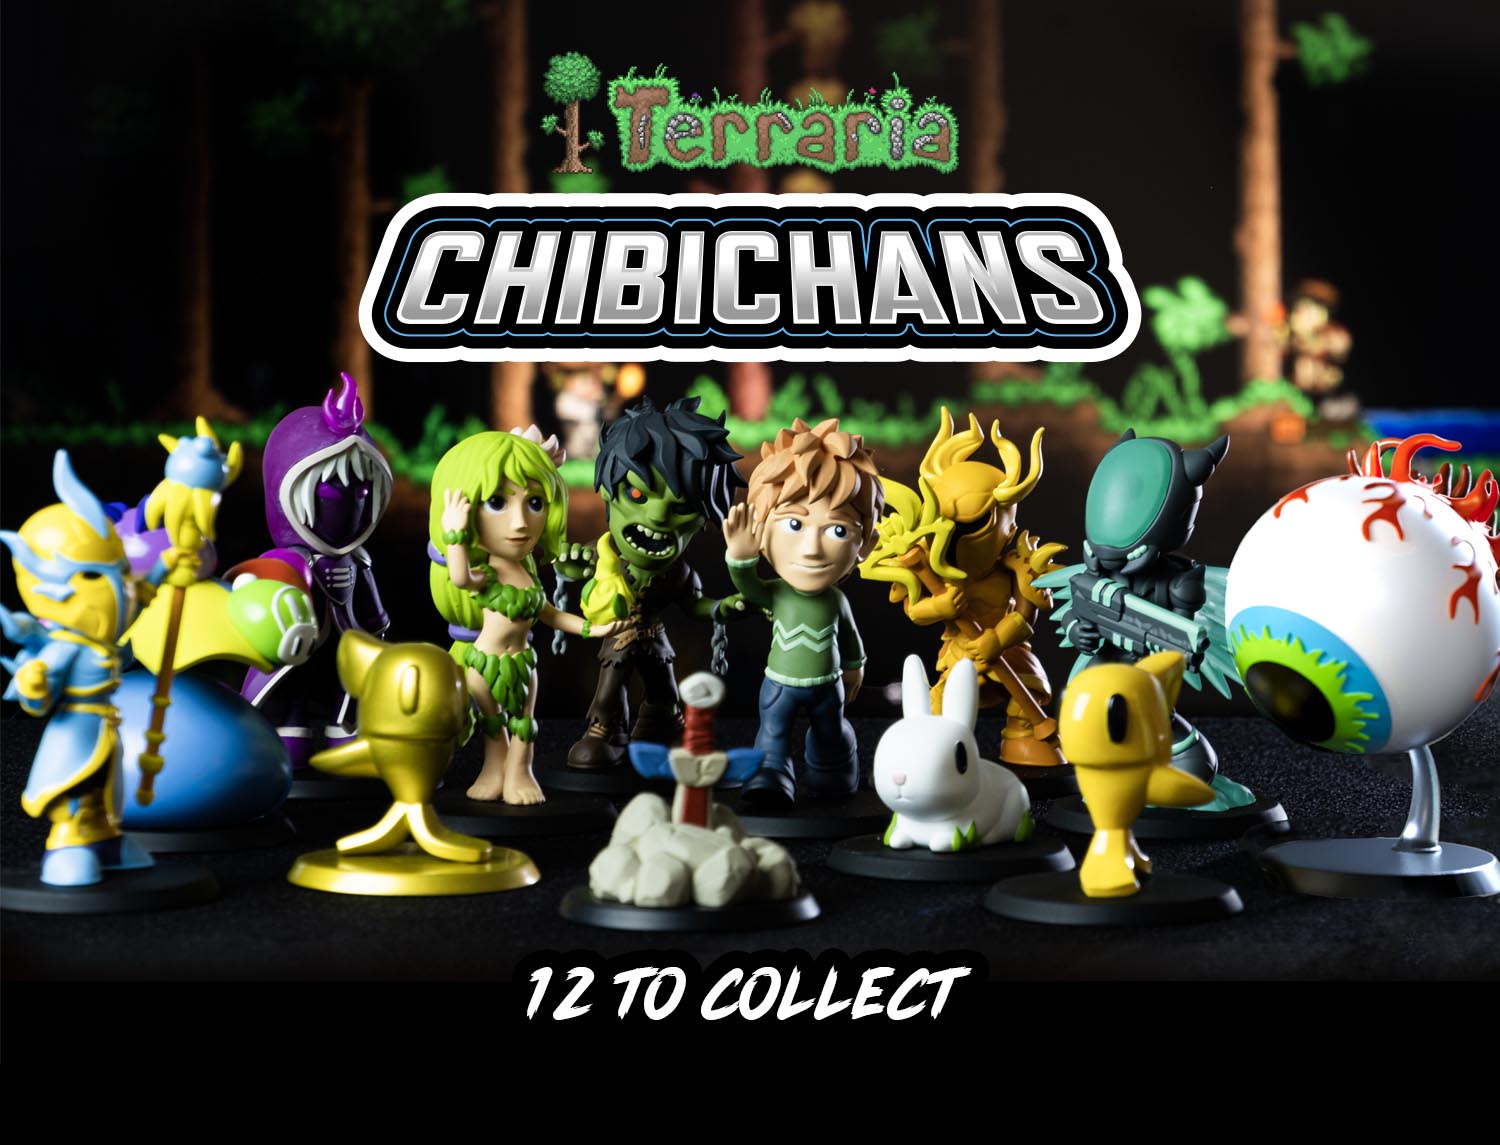 Chibichans - Mystery Mini Figures